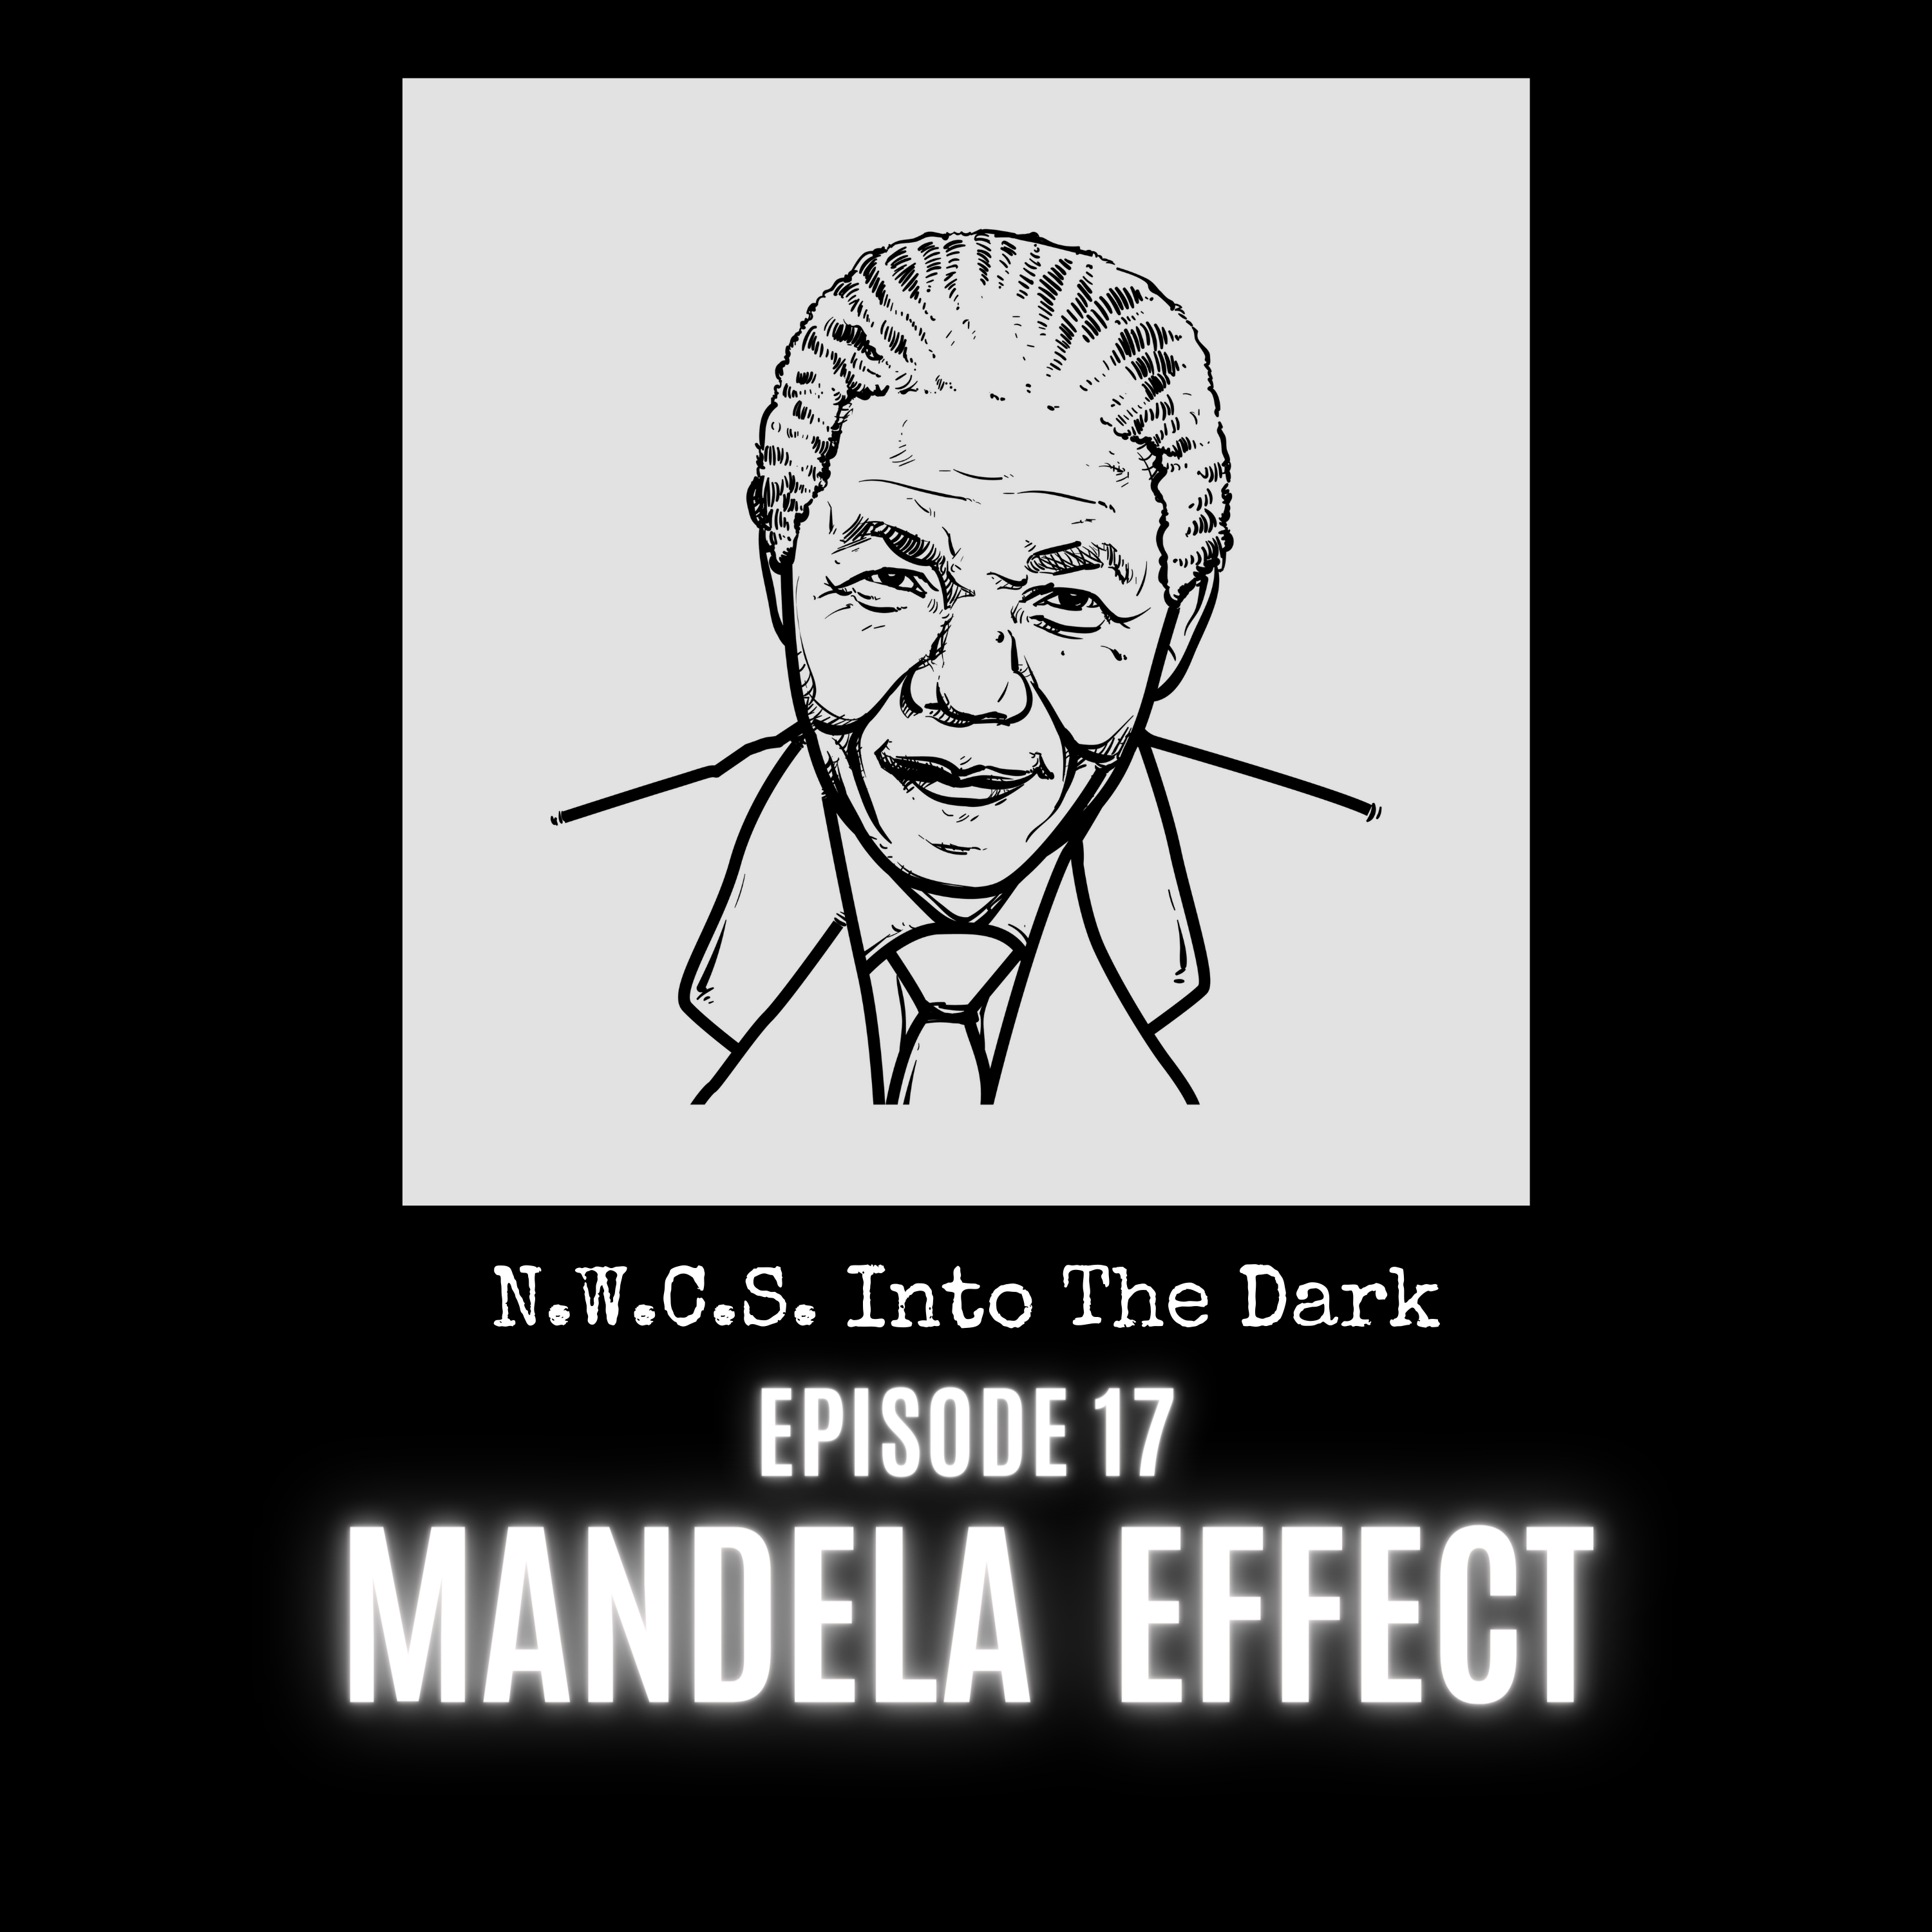 N.W.C.S. - Into The Dark Episode 17 Mandela Effect